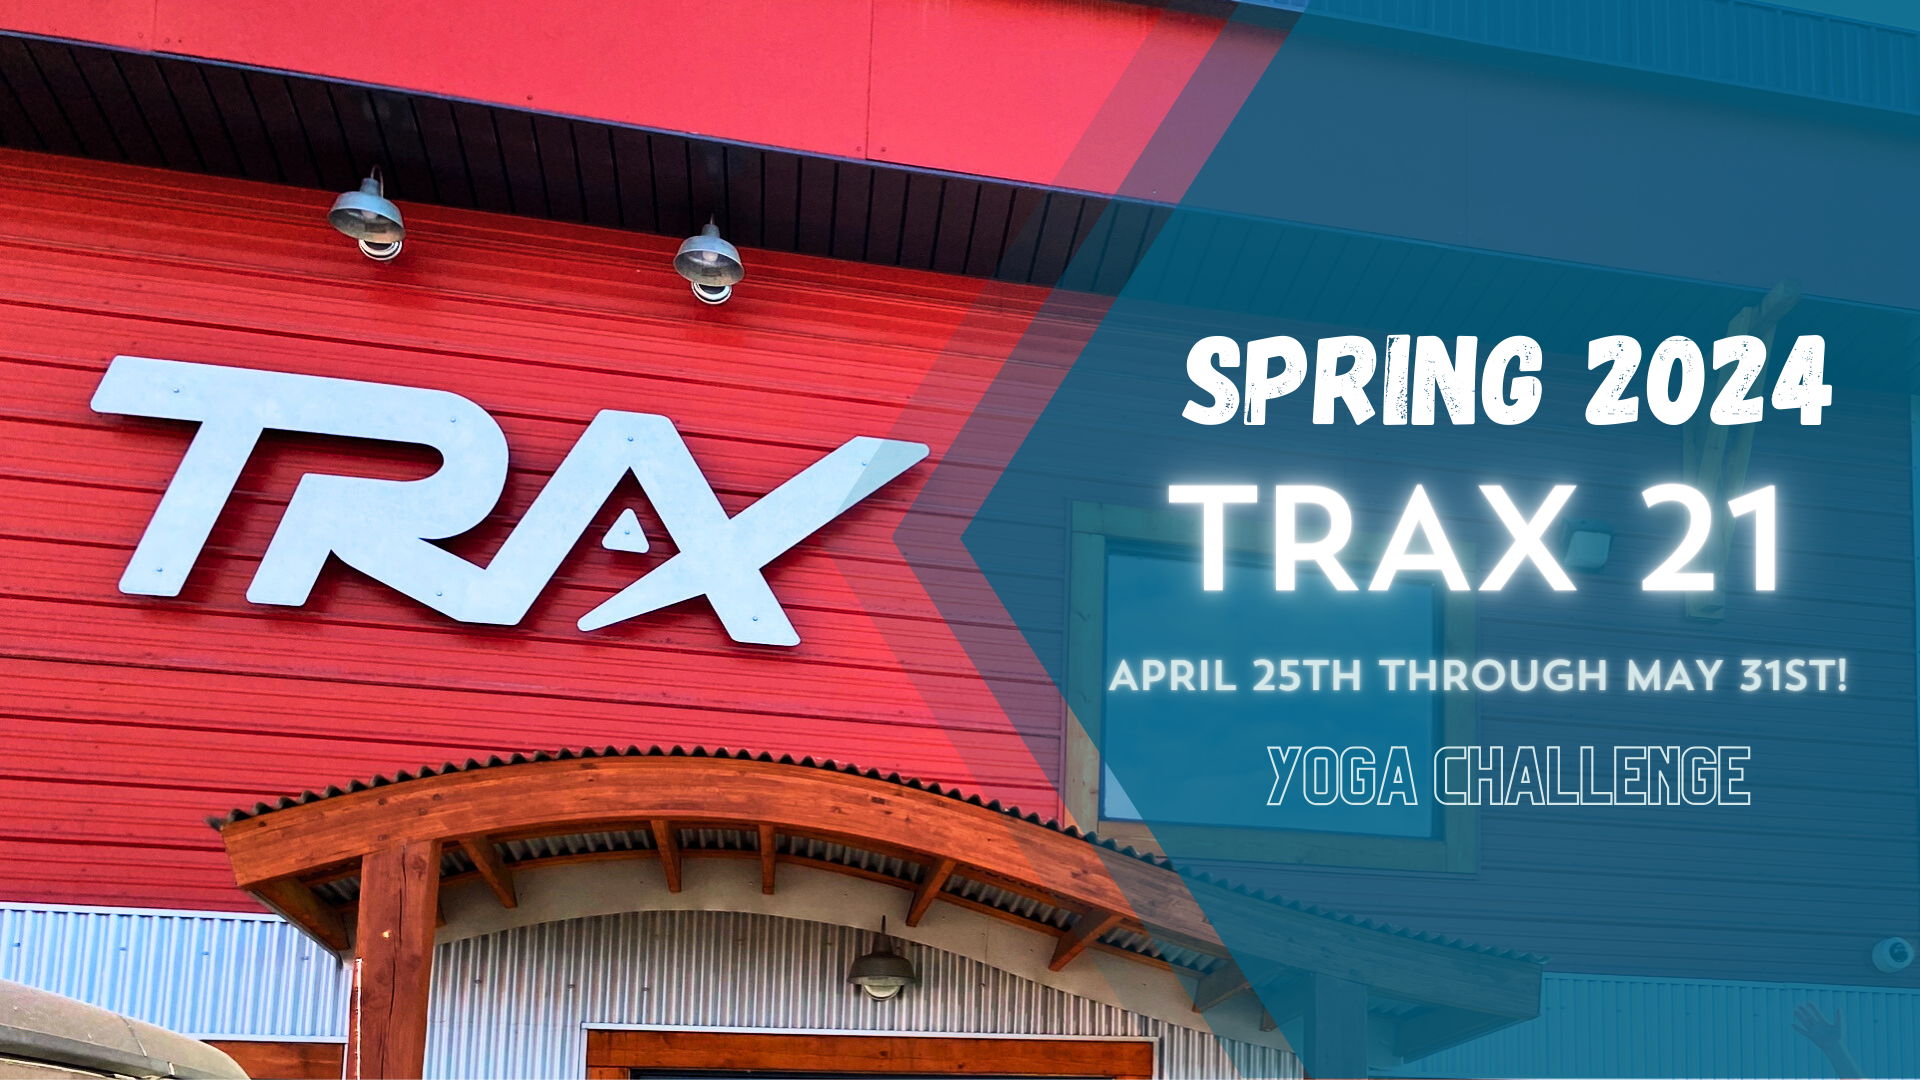 TRAX 21 Spring Challenge @ Trax Outdoor Center